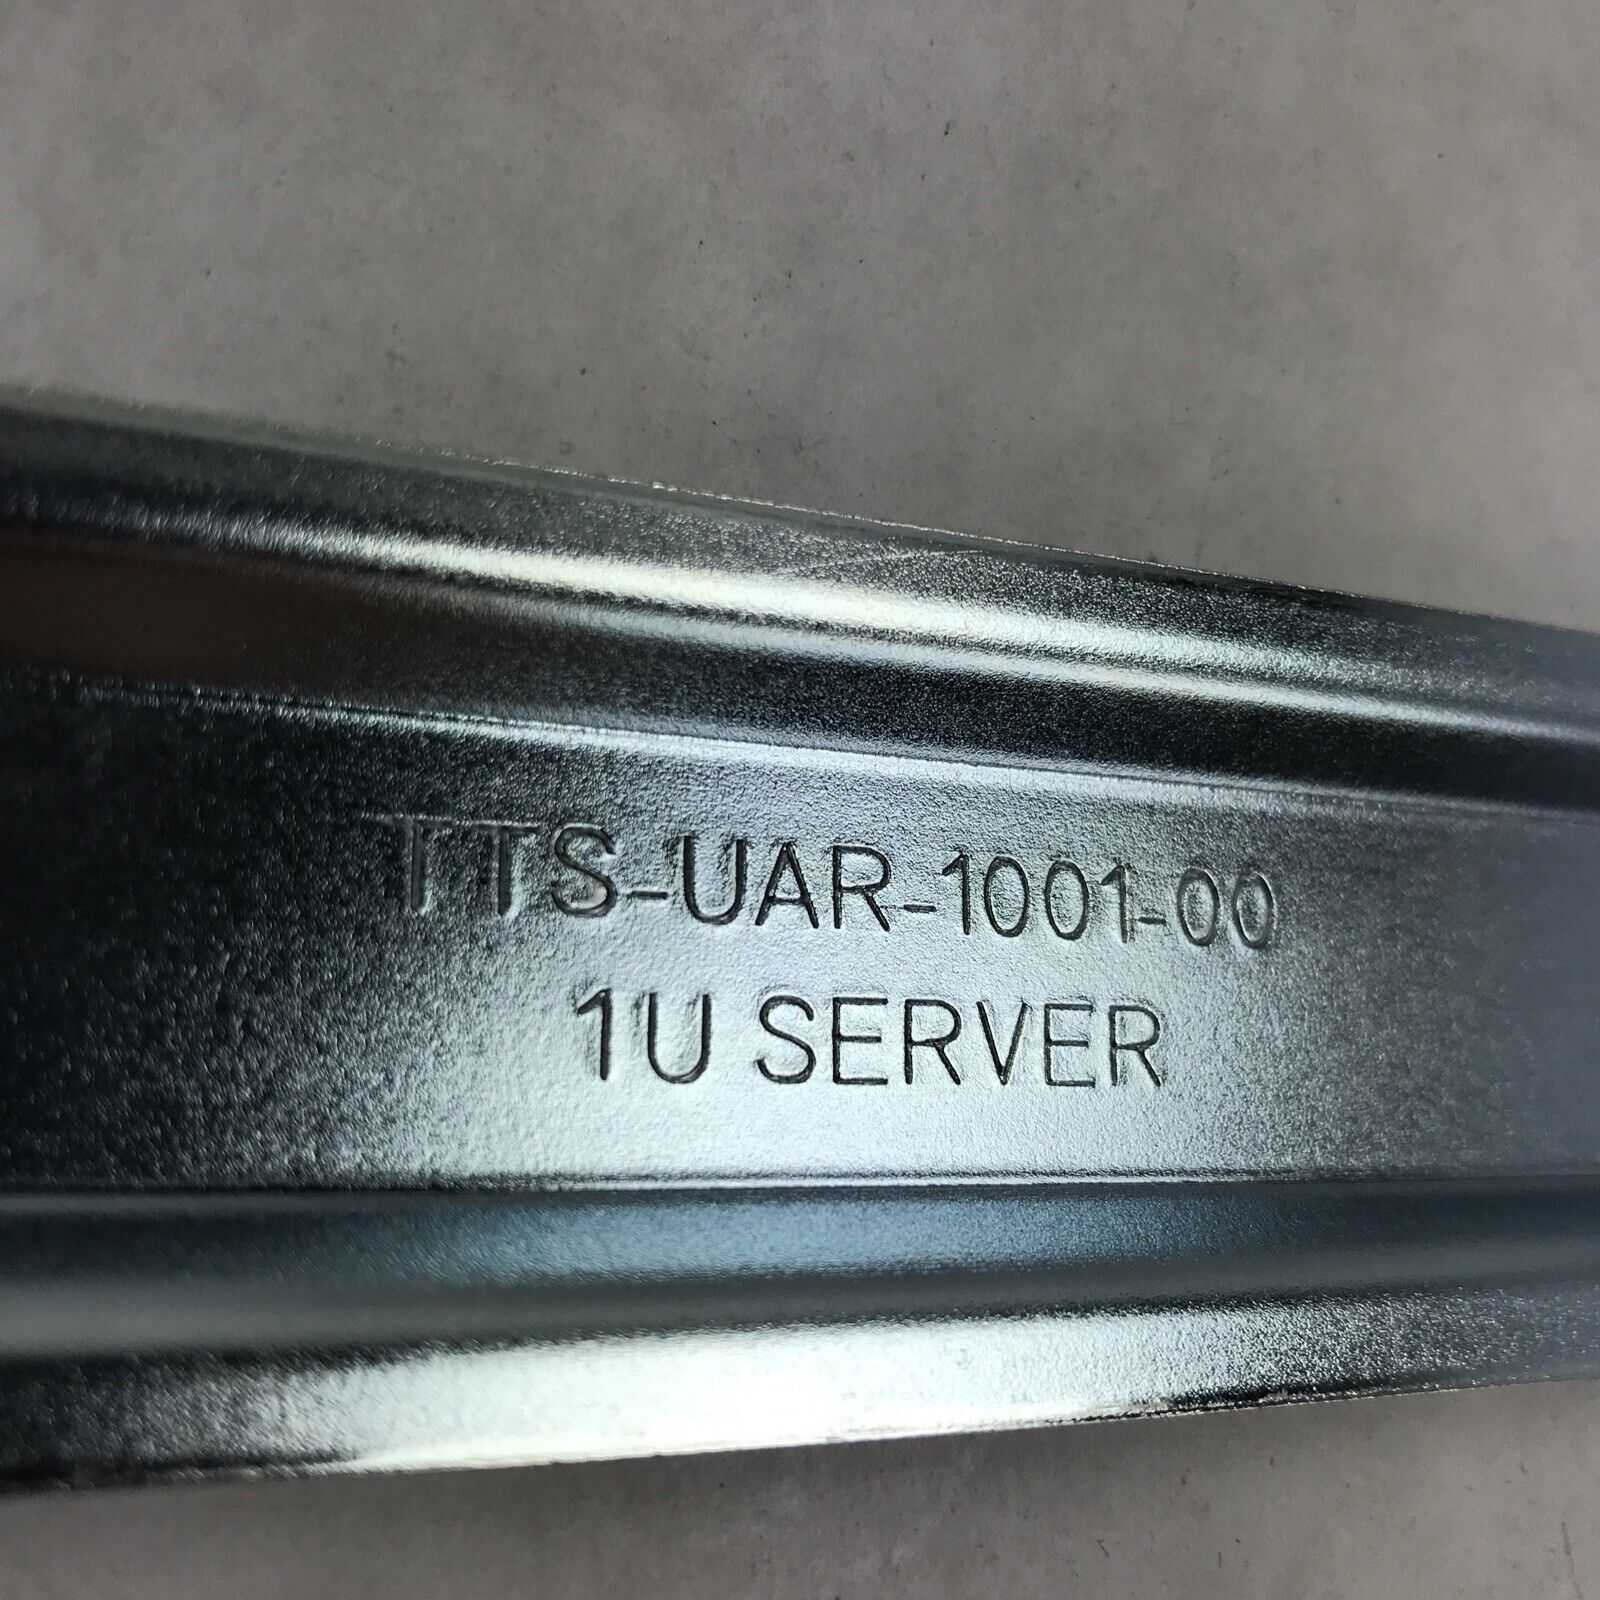 TTS-UAR-1001-00 Pair of Inner Rails for Citrix Adjustable Rails